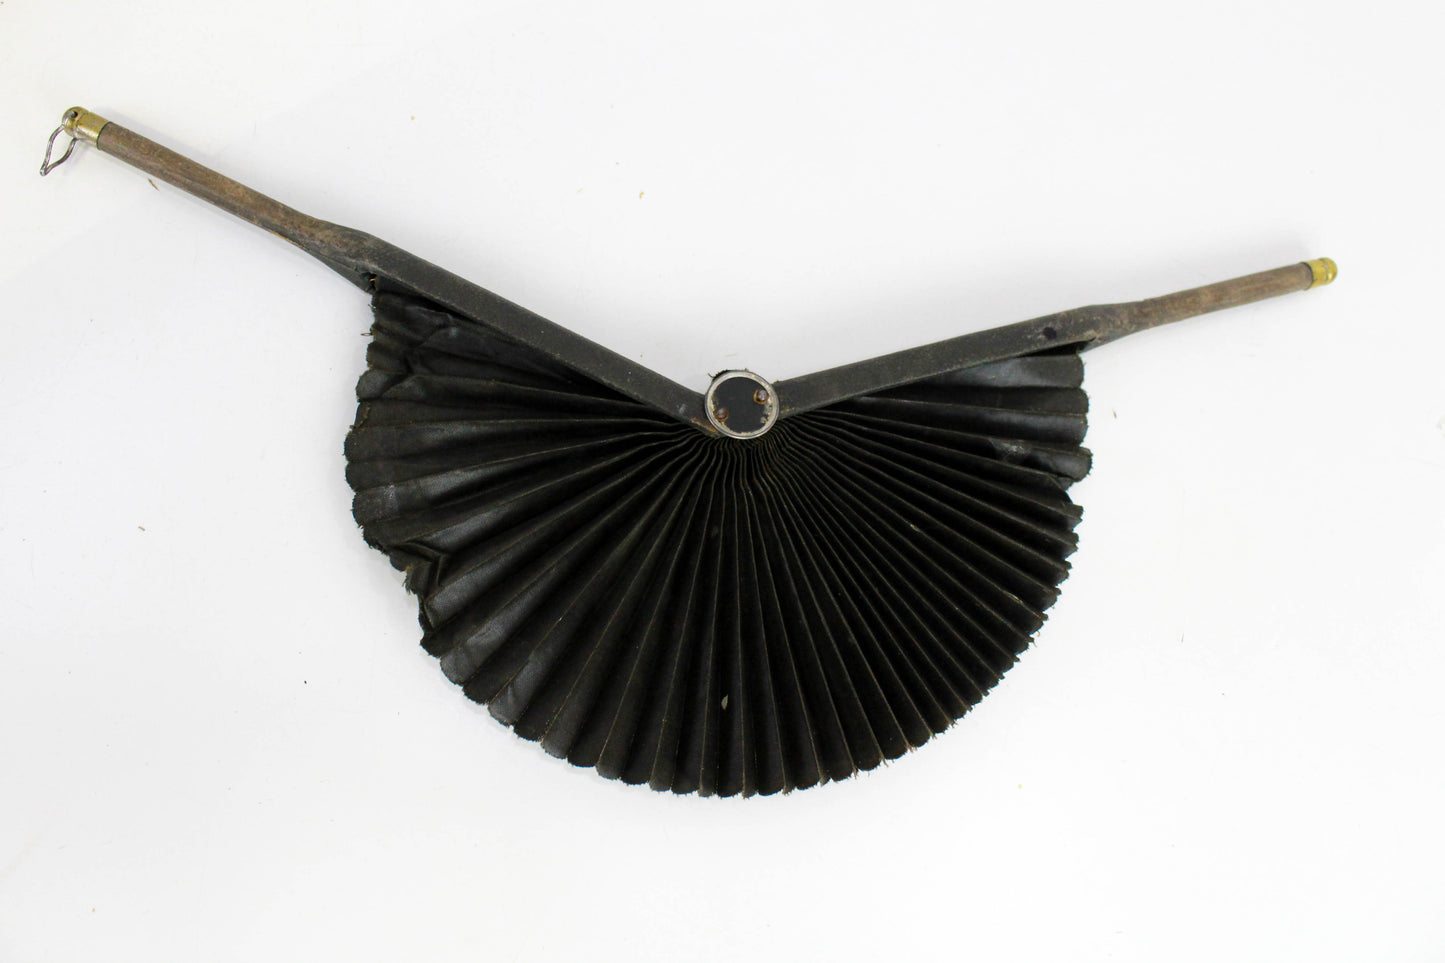 Victorian Cockade Fan, Round Mourning Folding Fan, Antique Black Circular Fan, Gothic 19th Century